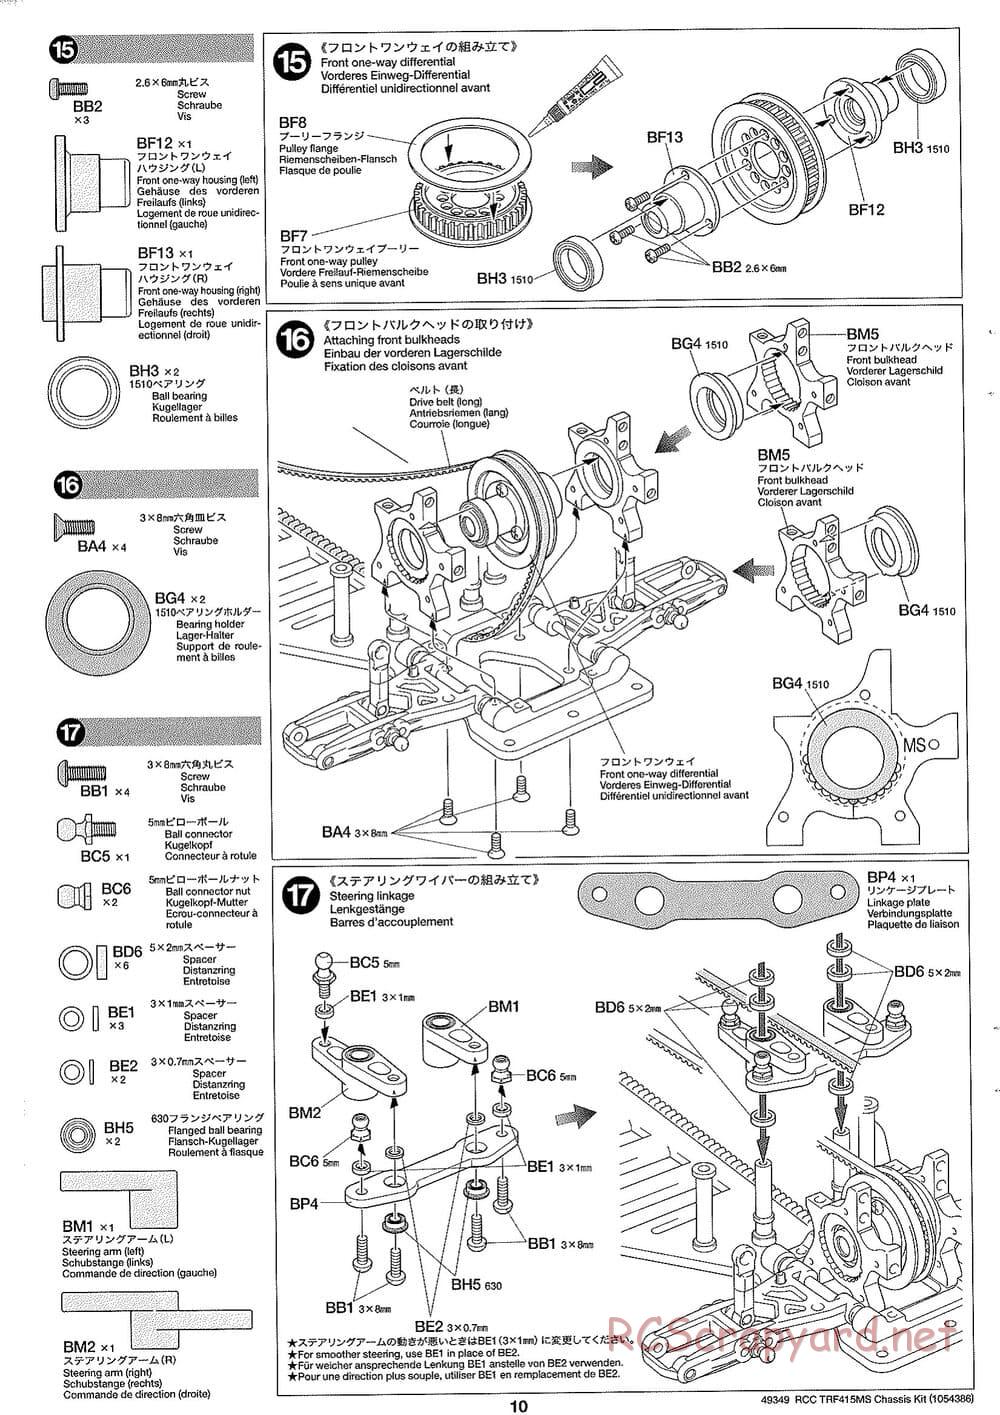 Tamiya - TRF415-MS Chassis - Manual - Page 10